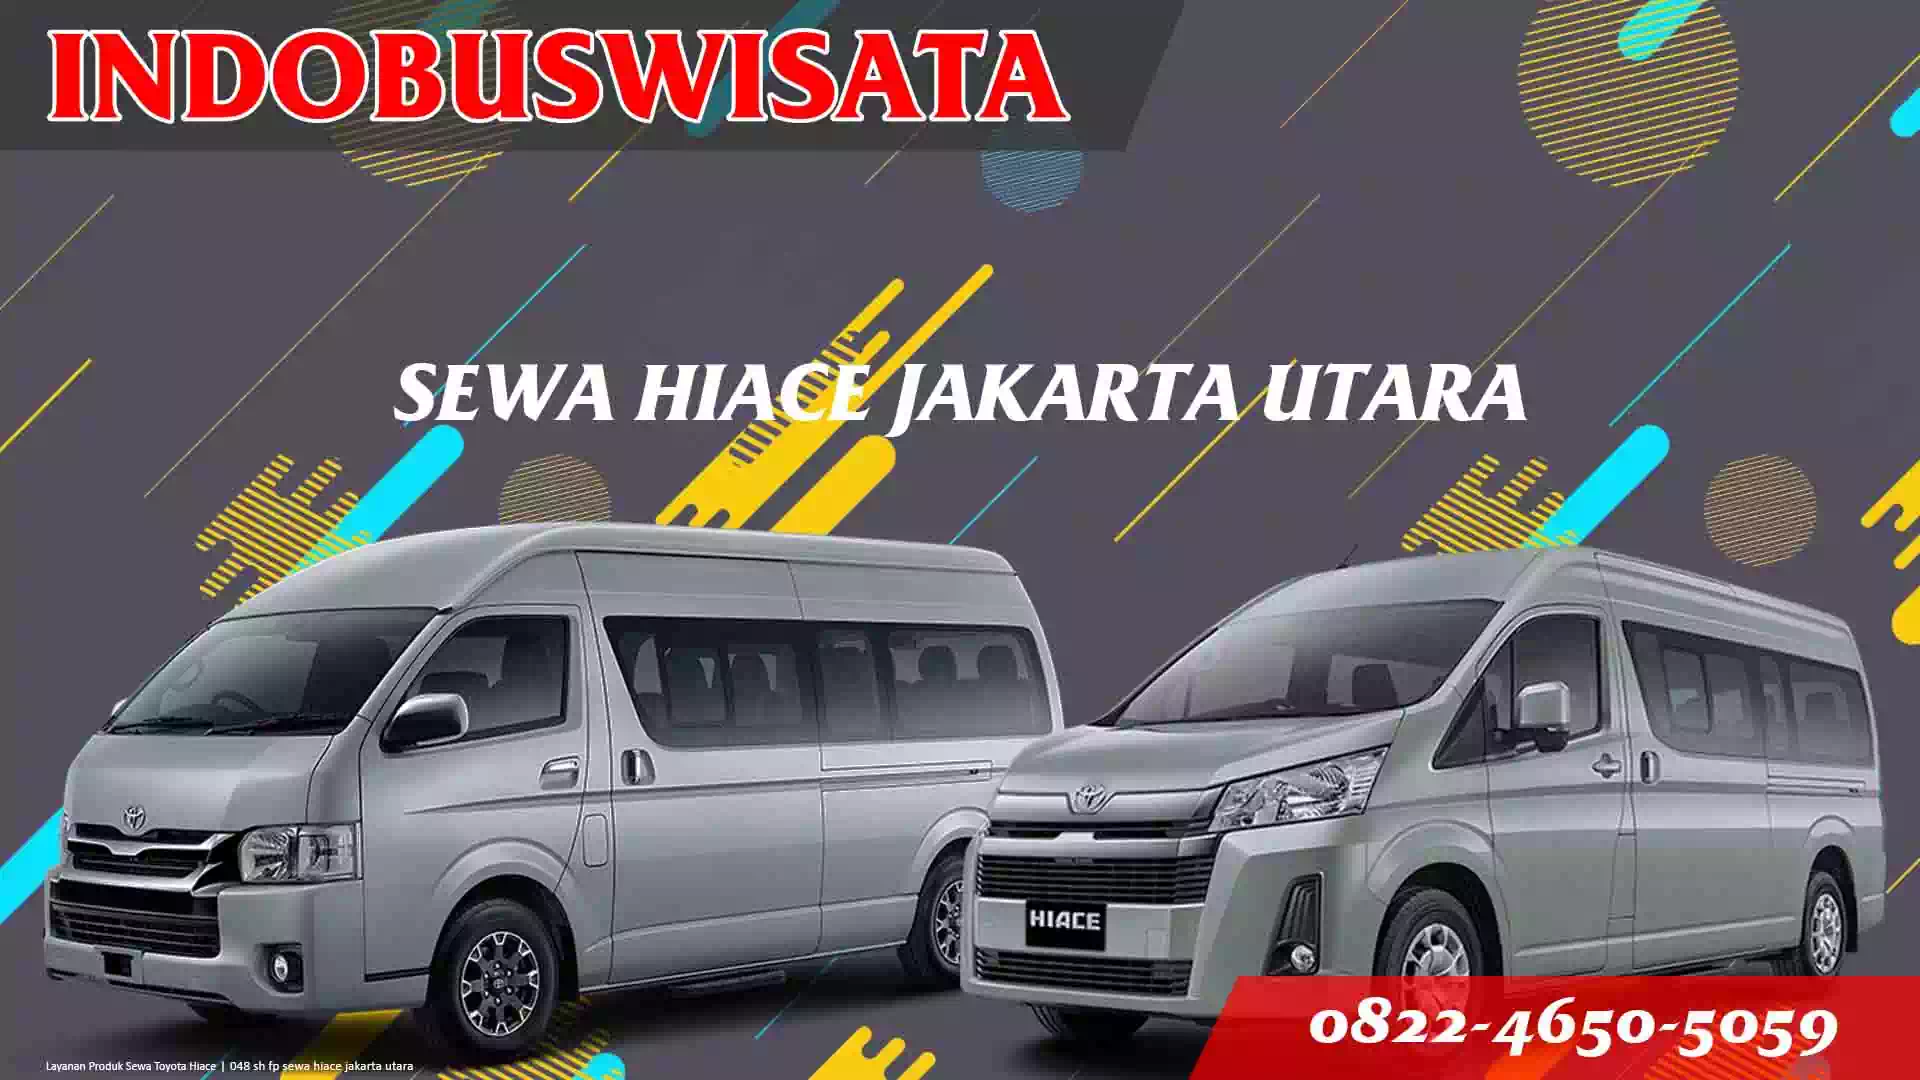 048 Sh Fp Sewa Hiace Jakarta Utara Indobuswisata